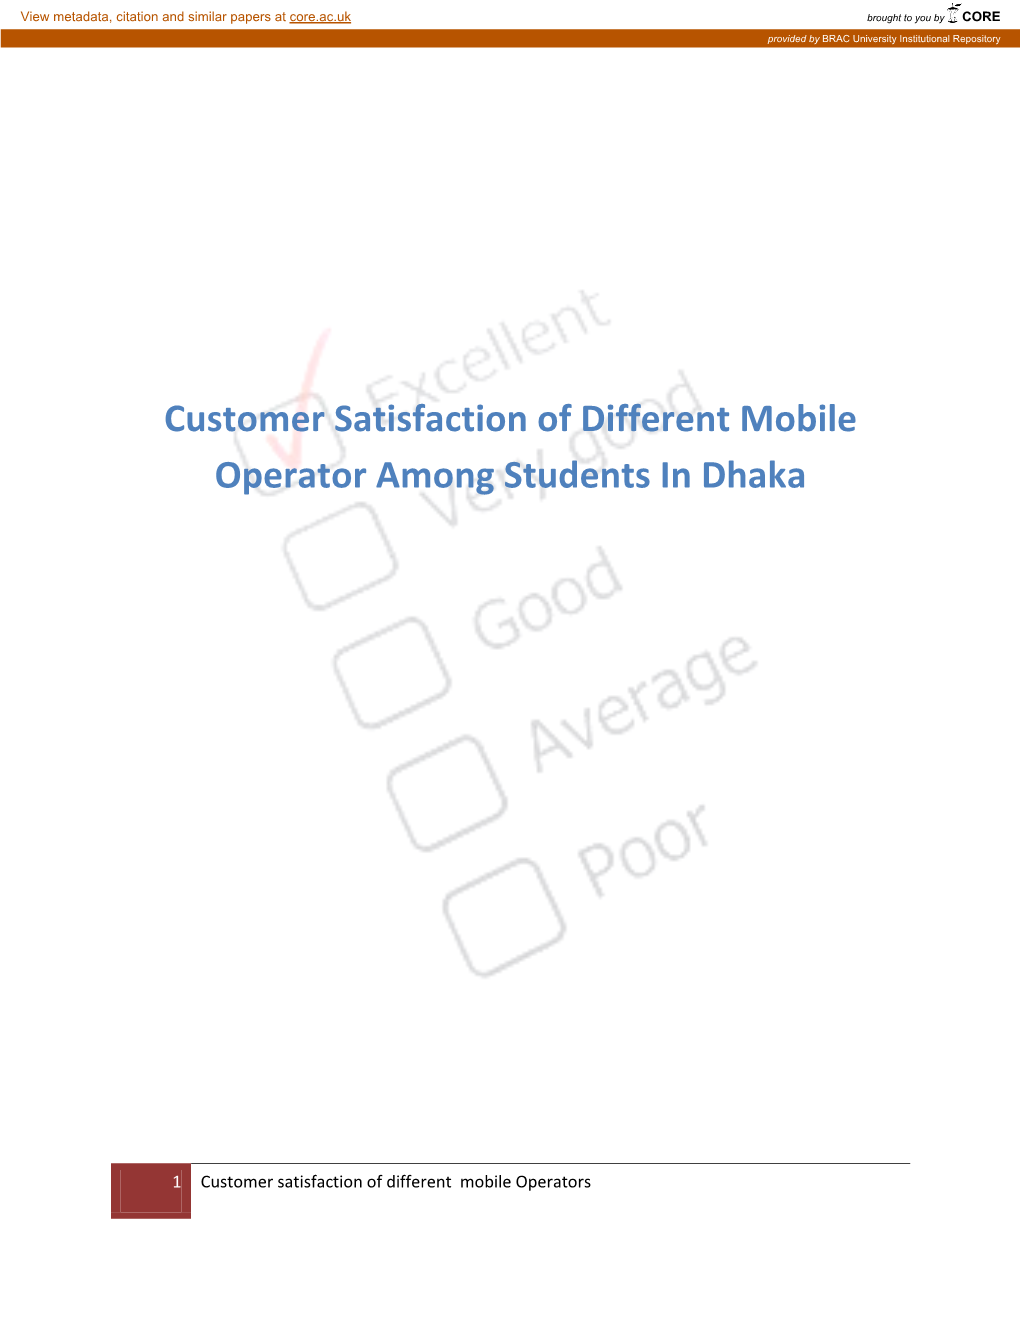 Customer Satisfaction of Different Mobile Operator Among Students in Dhaka